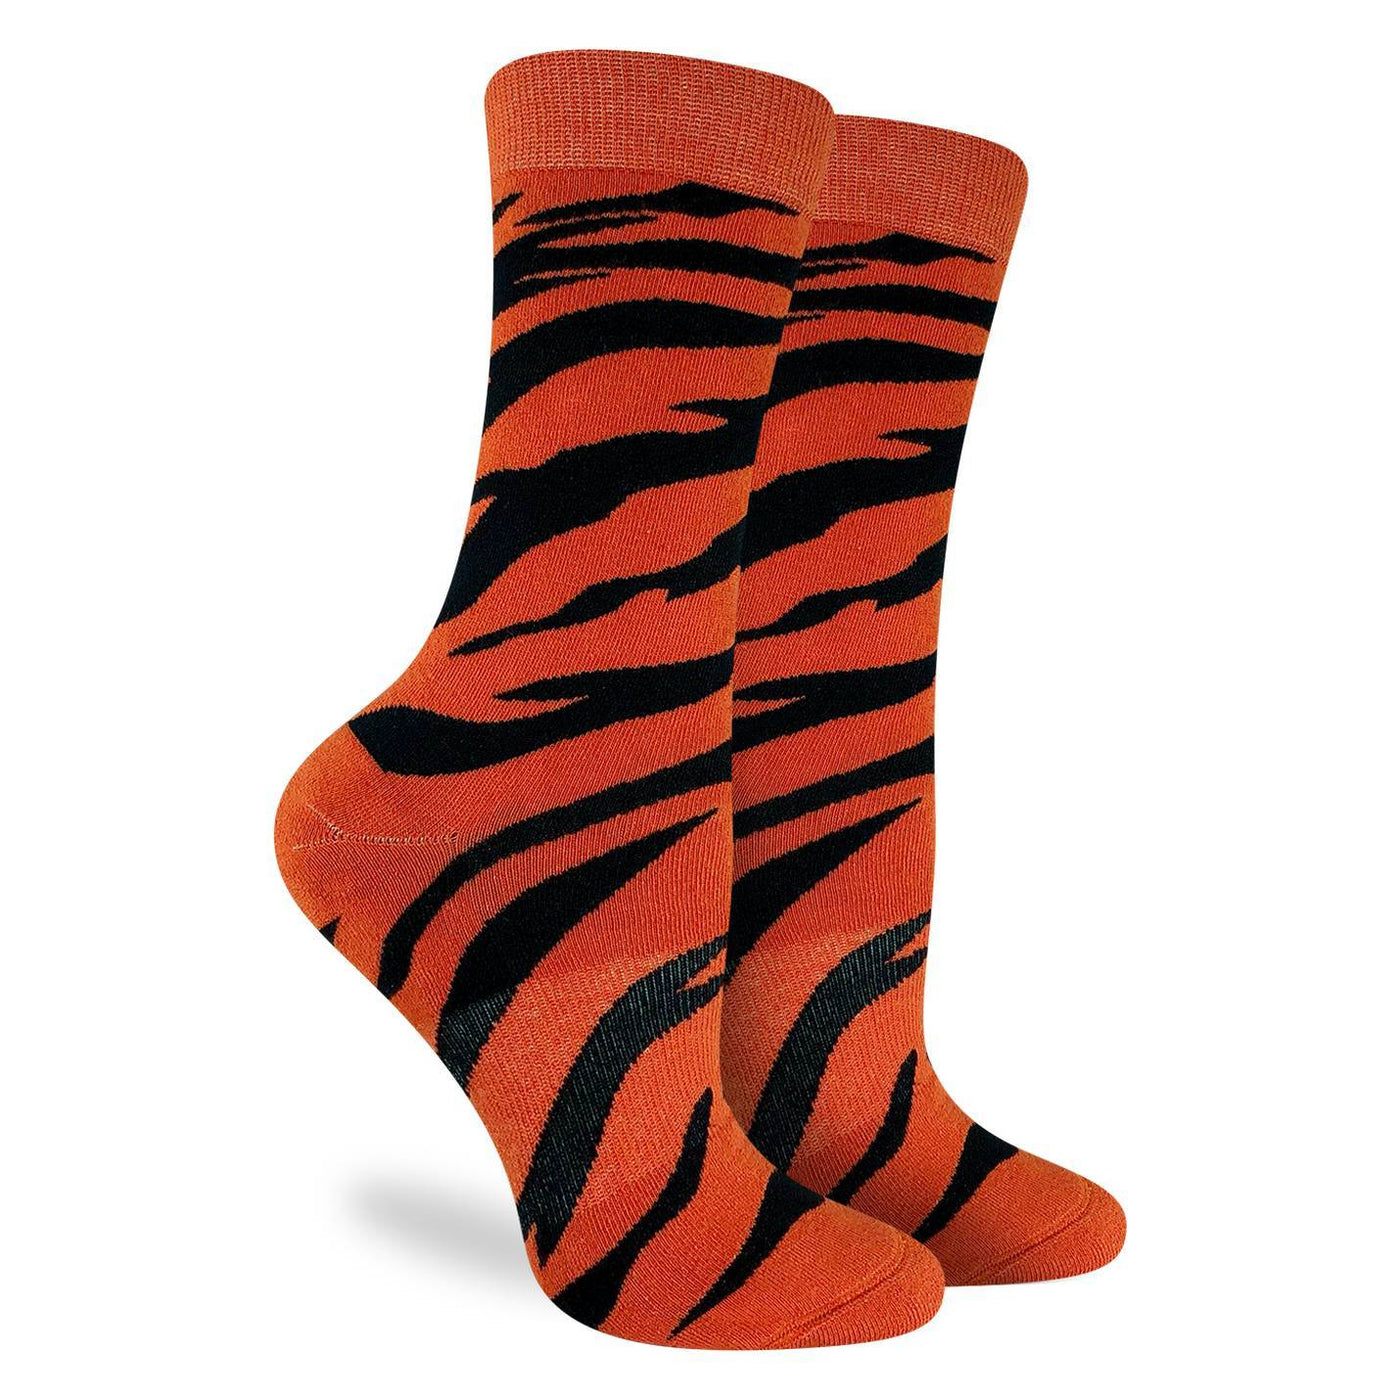 "Tiger Print" Cotton Crew Socks by Good Luck Sock - Medium